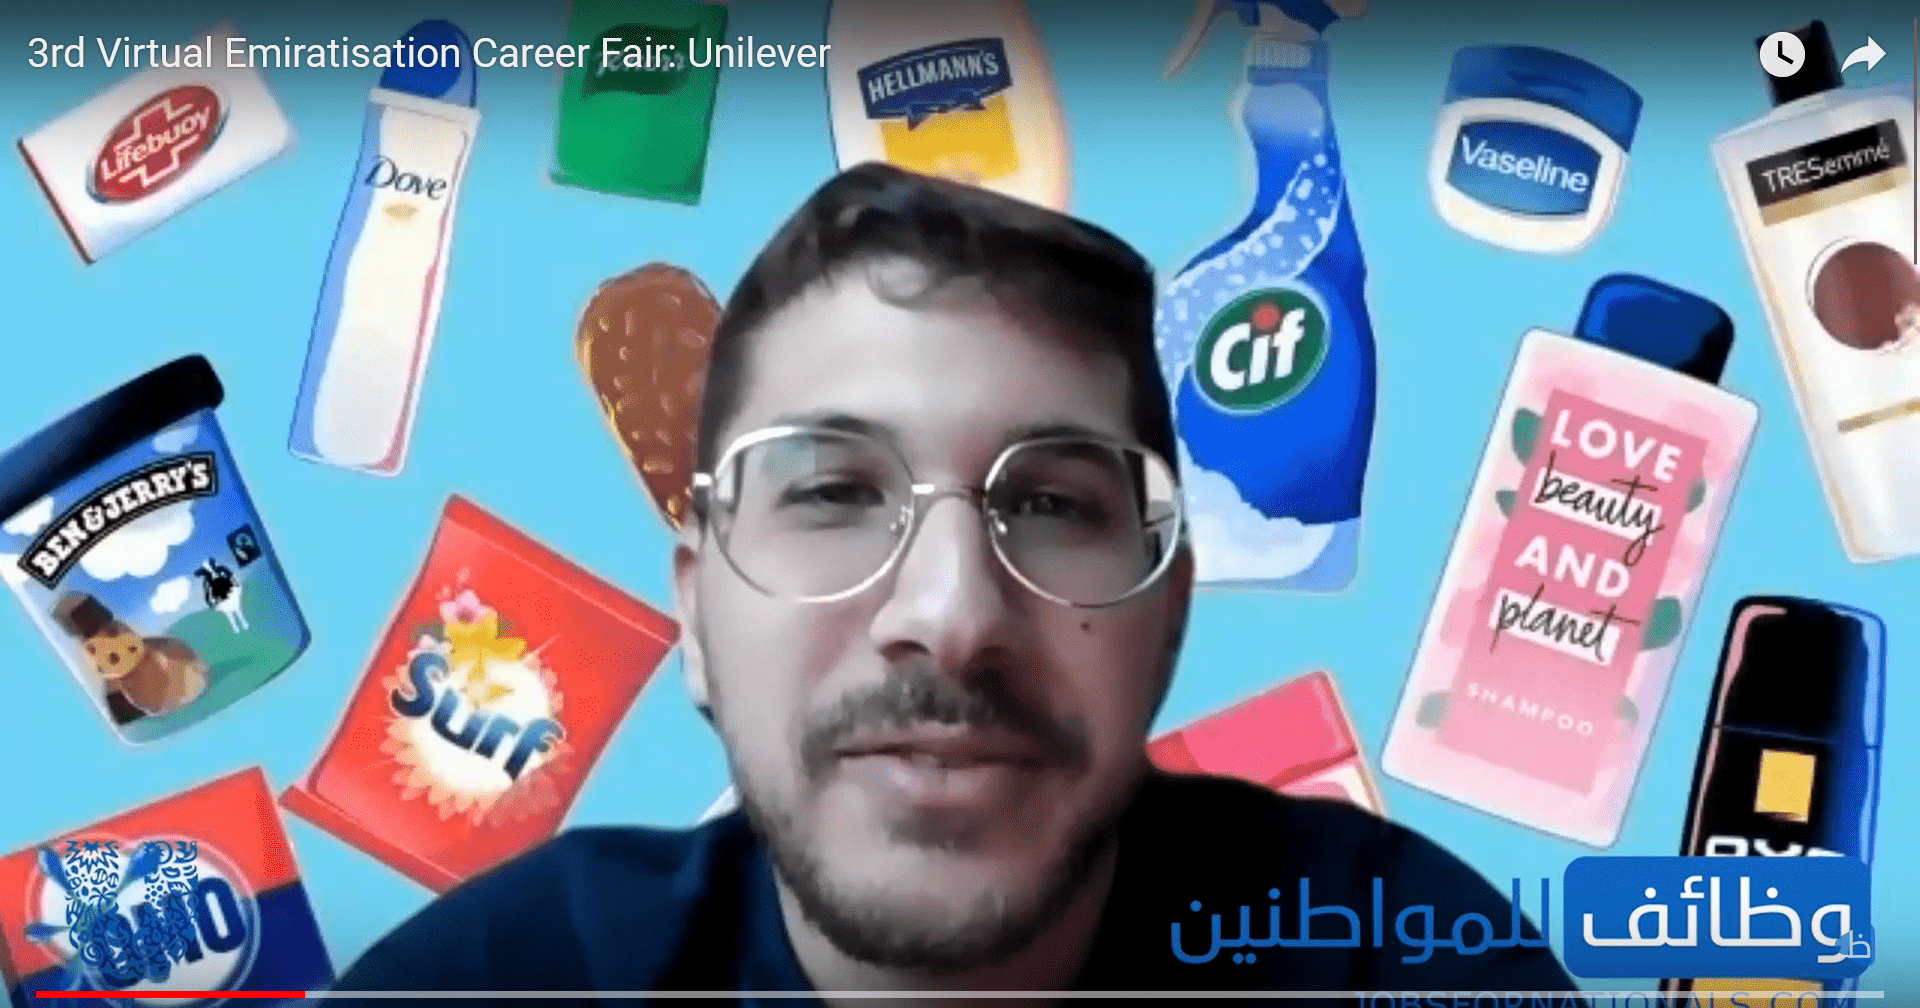 Meet Unilever at the 3rd Virtual Emiratisation Career Fair 1